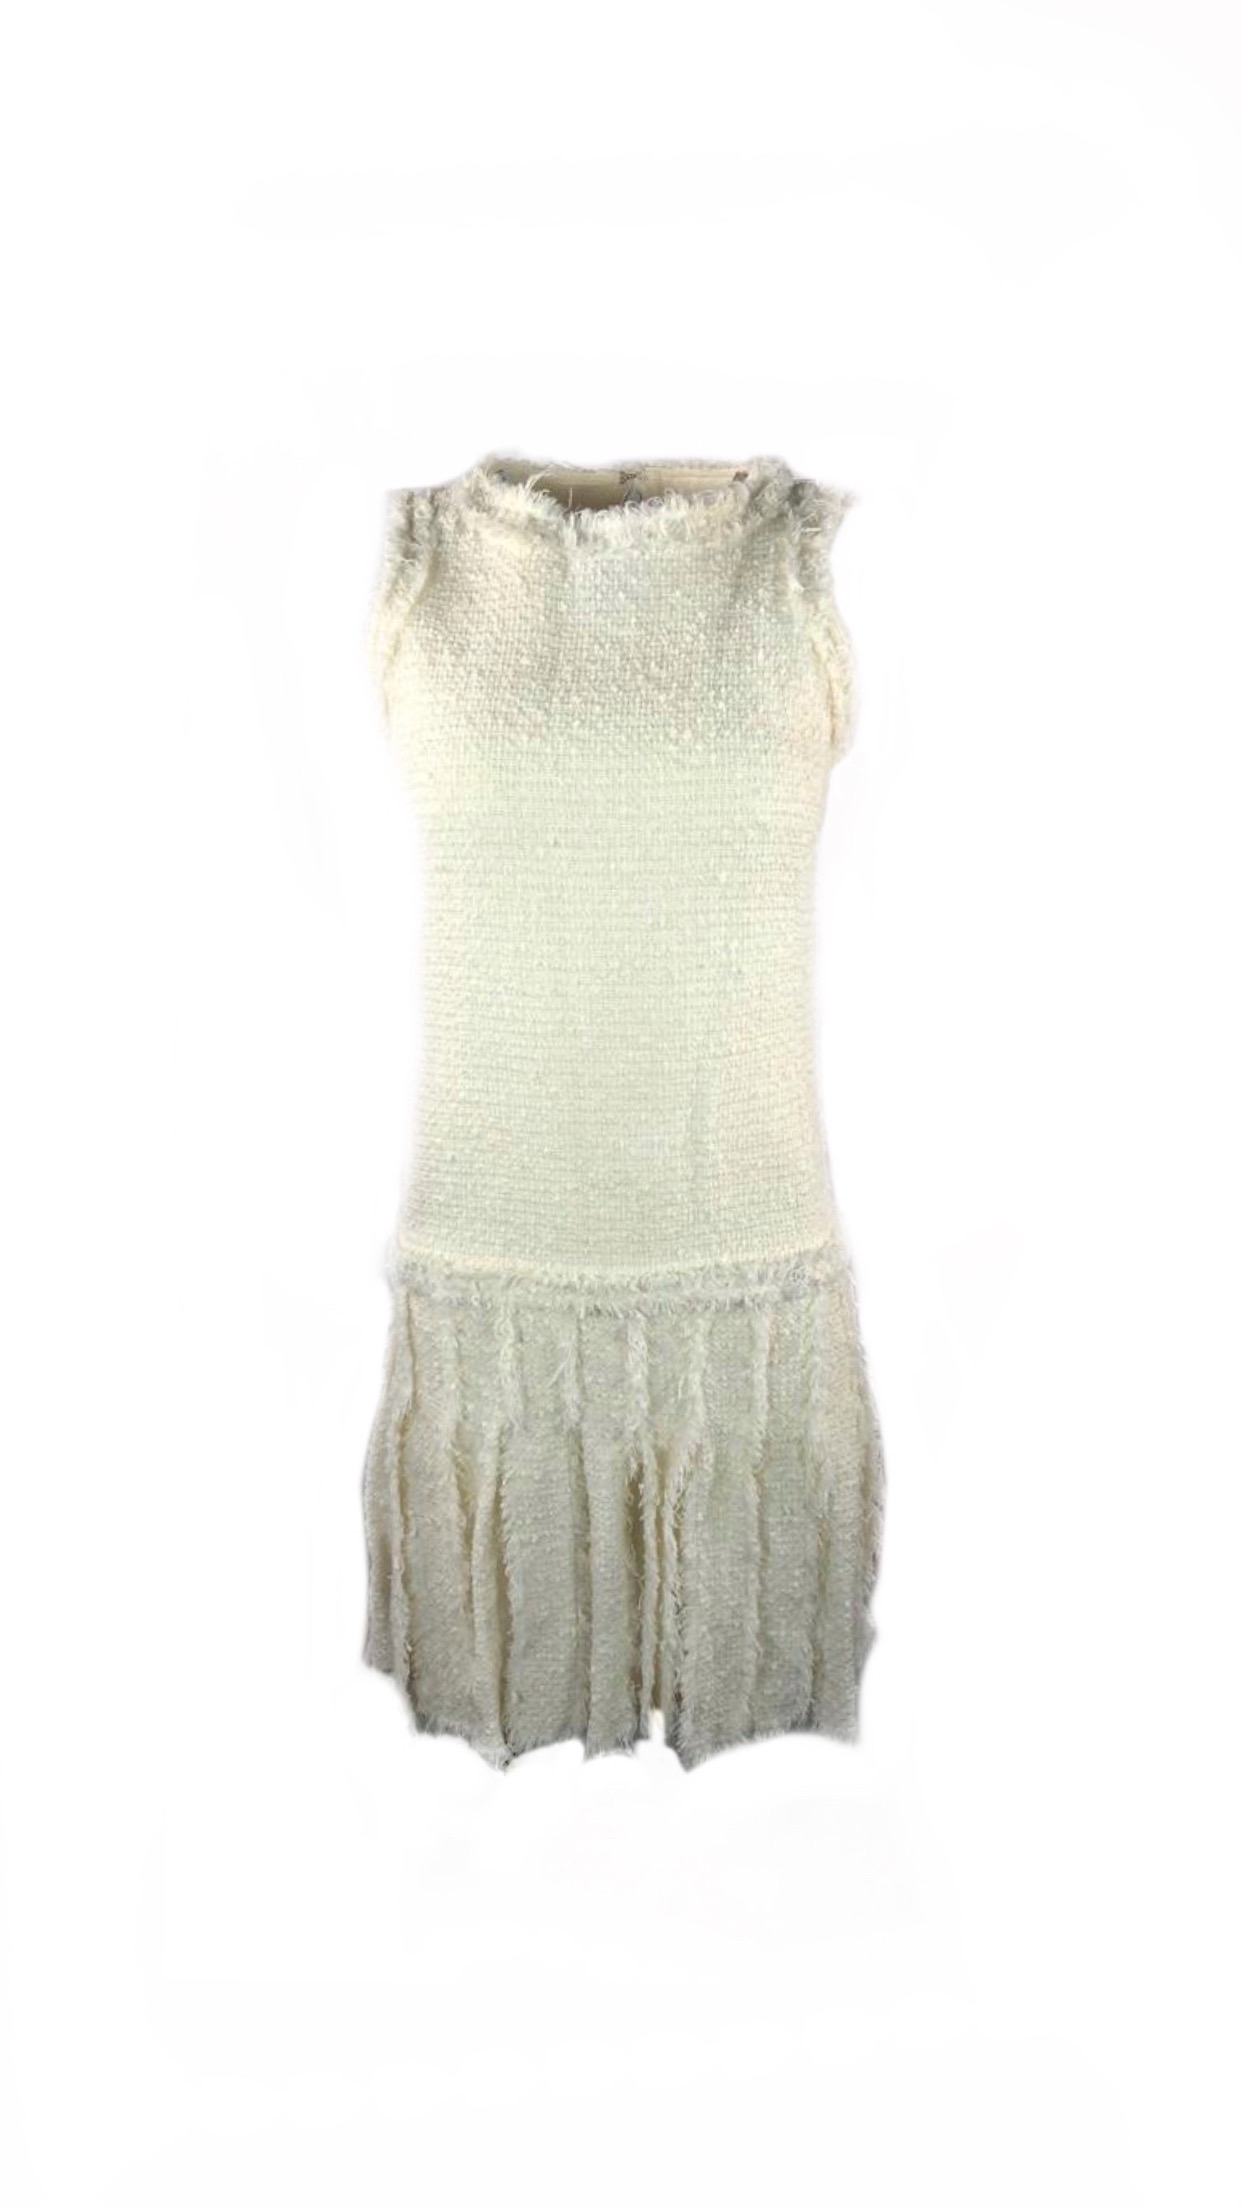 Chanel Tweed Jeweled Runway Fringe Dress with Belt Nwt 310 11P Spring 2011